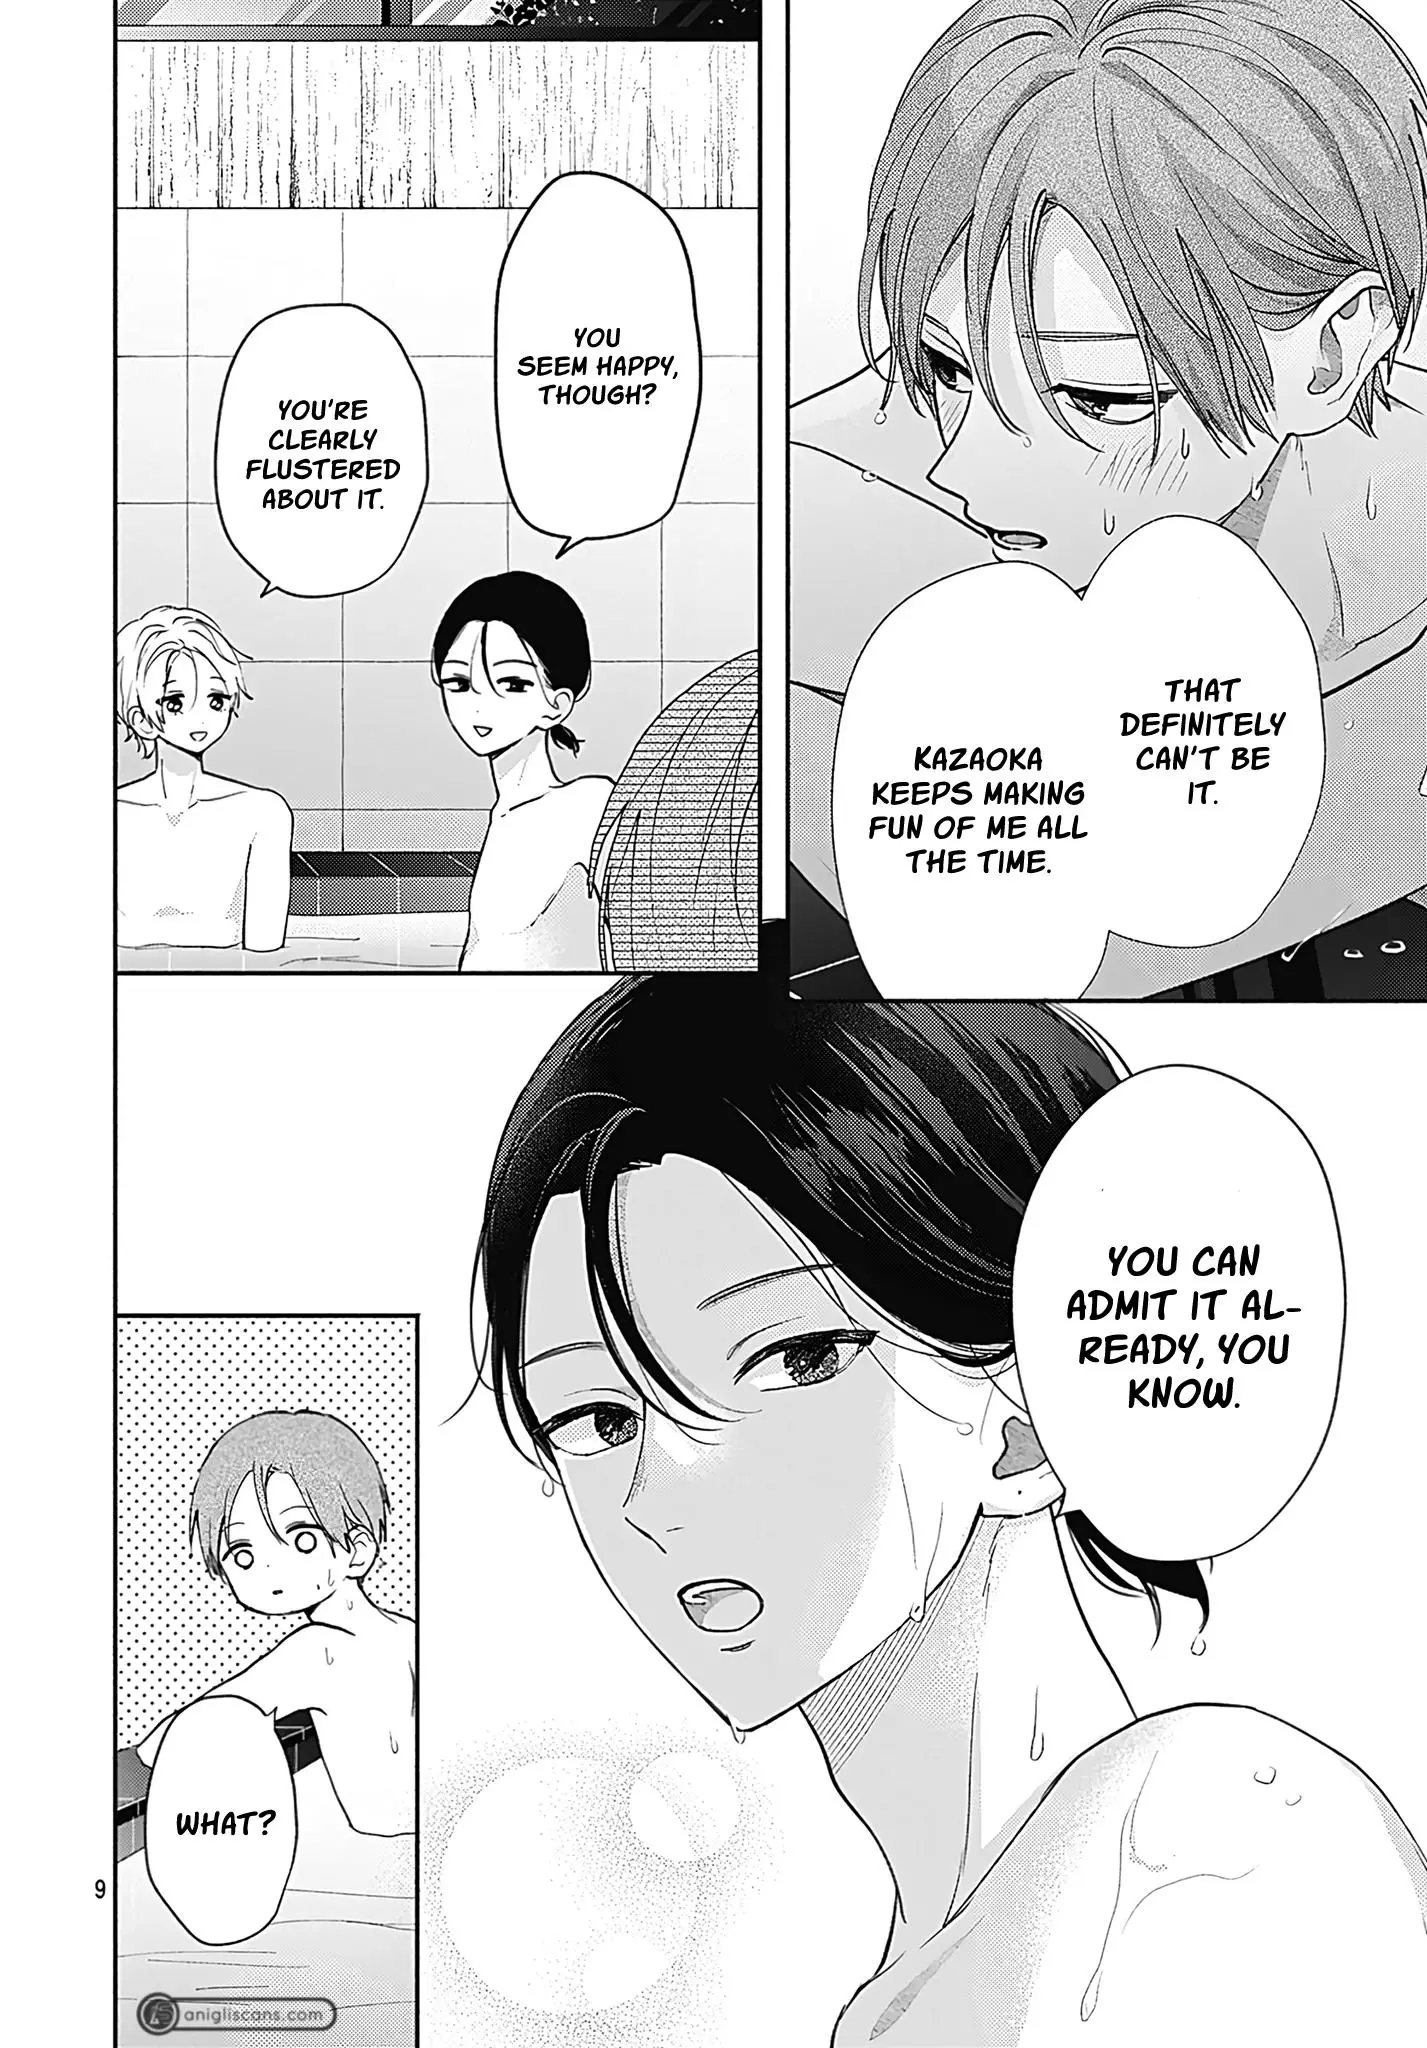 I Hate Komiyama - 5 page 9-8c8ea55b